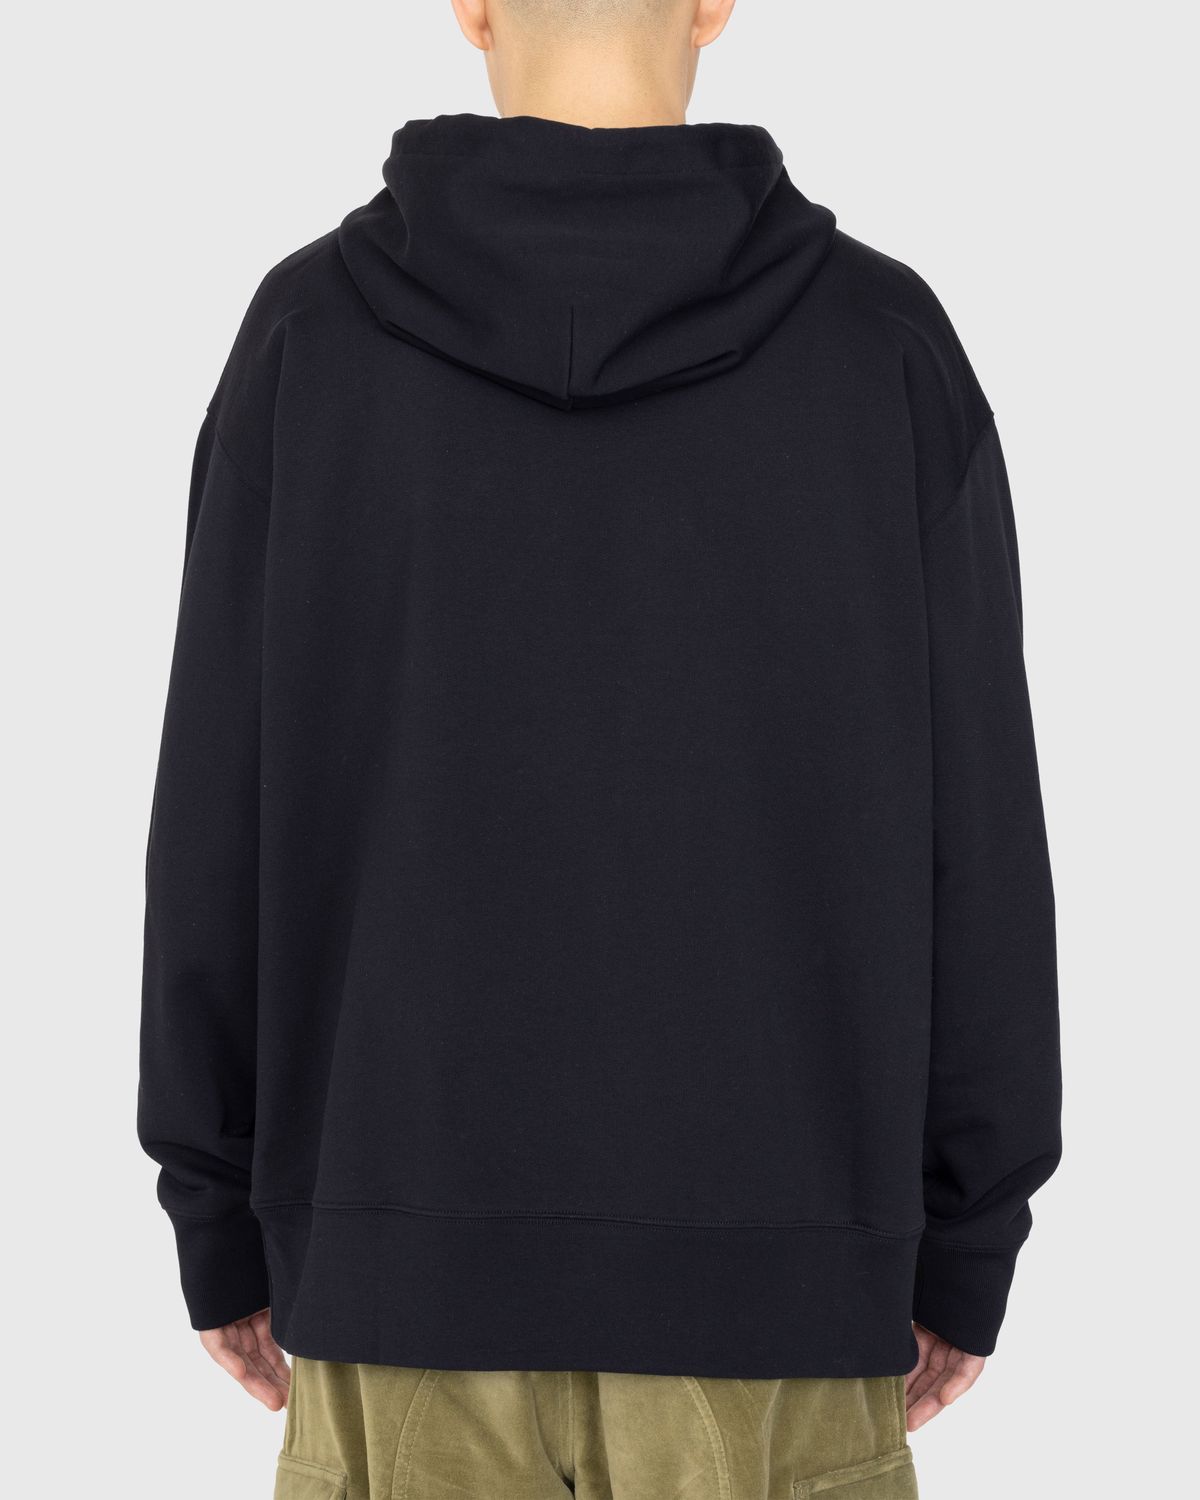 Acne Studios – Organic Cotton Hooded Sweatshirt Black - Hoodies - Black - Image 4